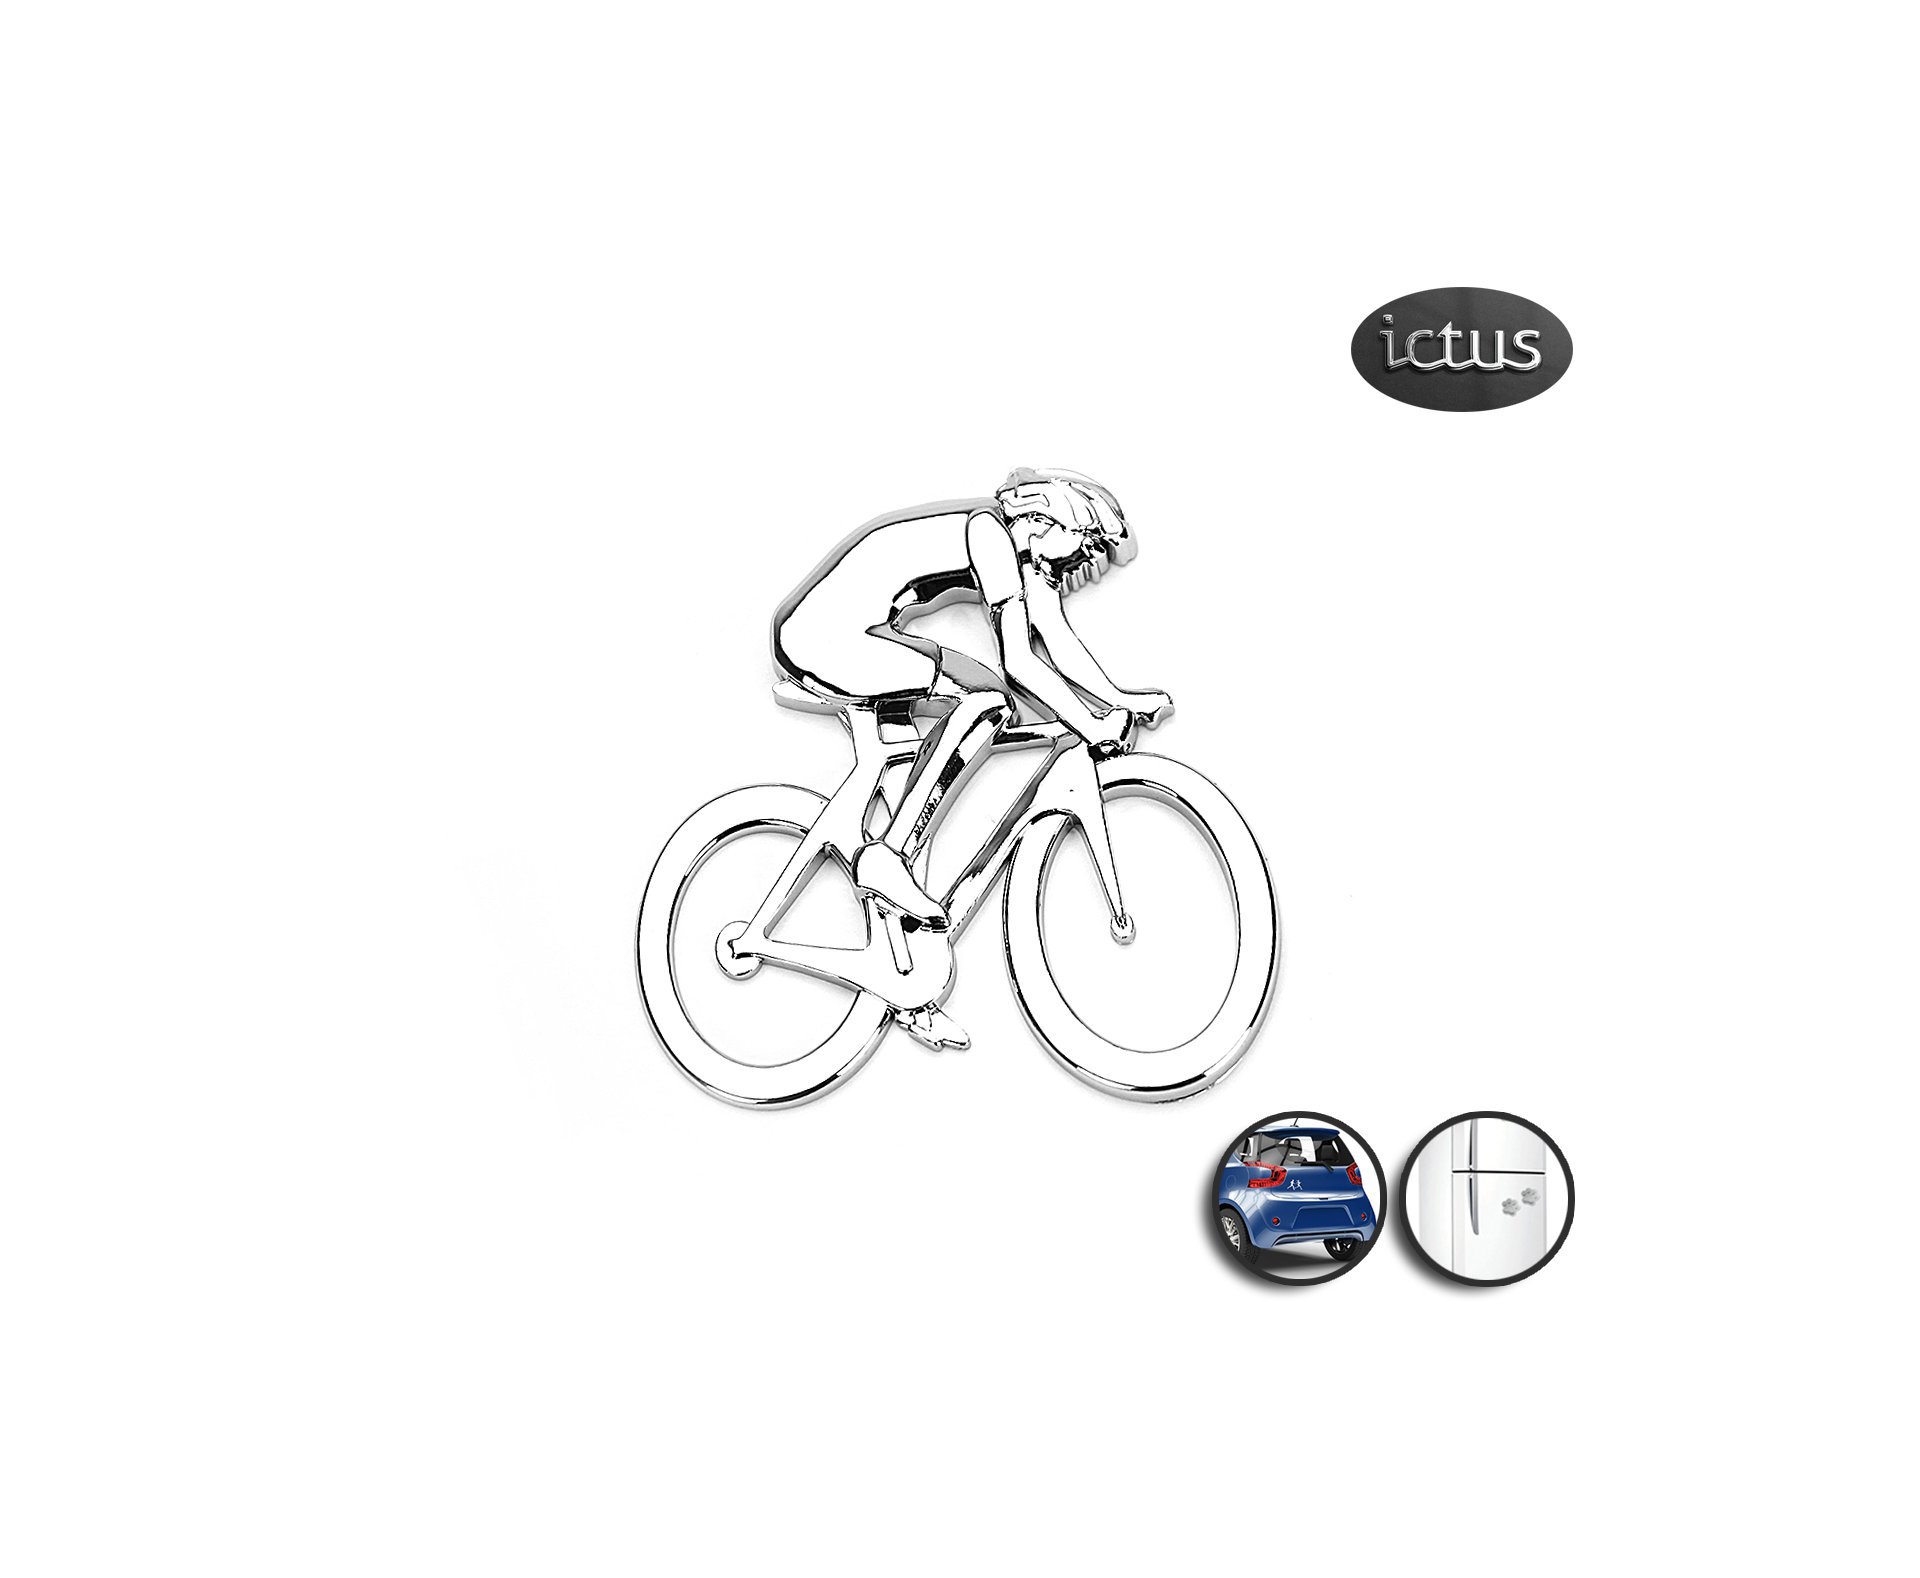 Emblema Ciclista - Ictus